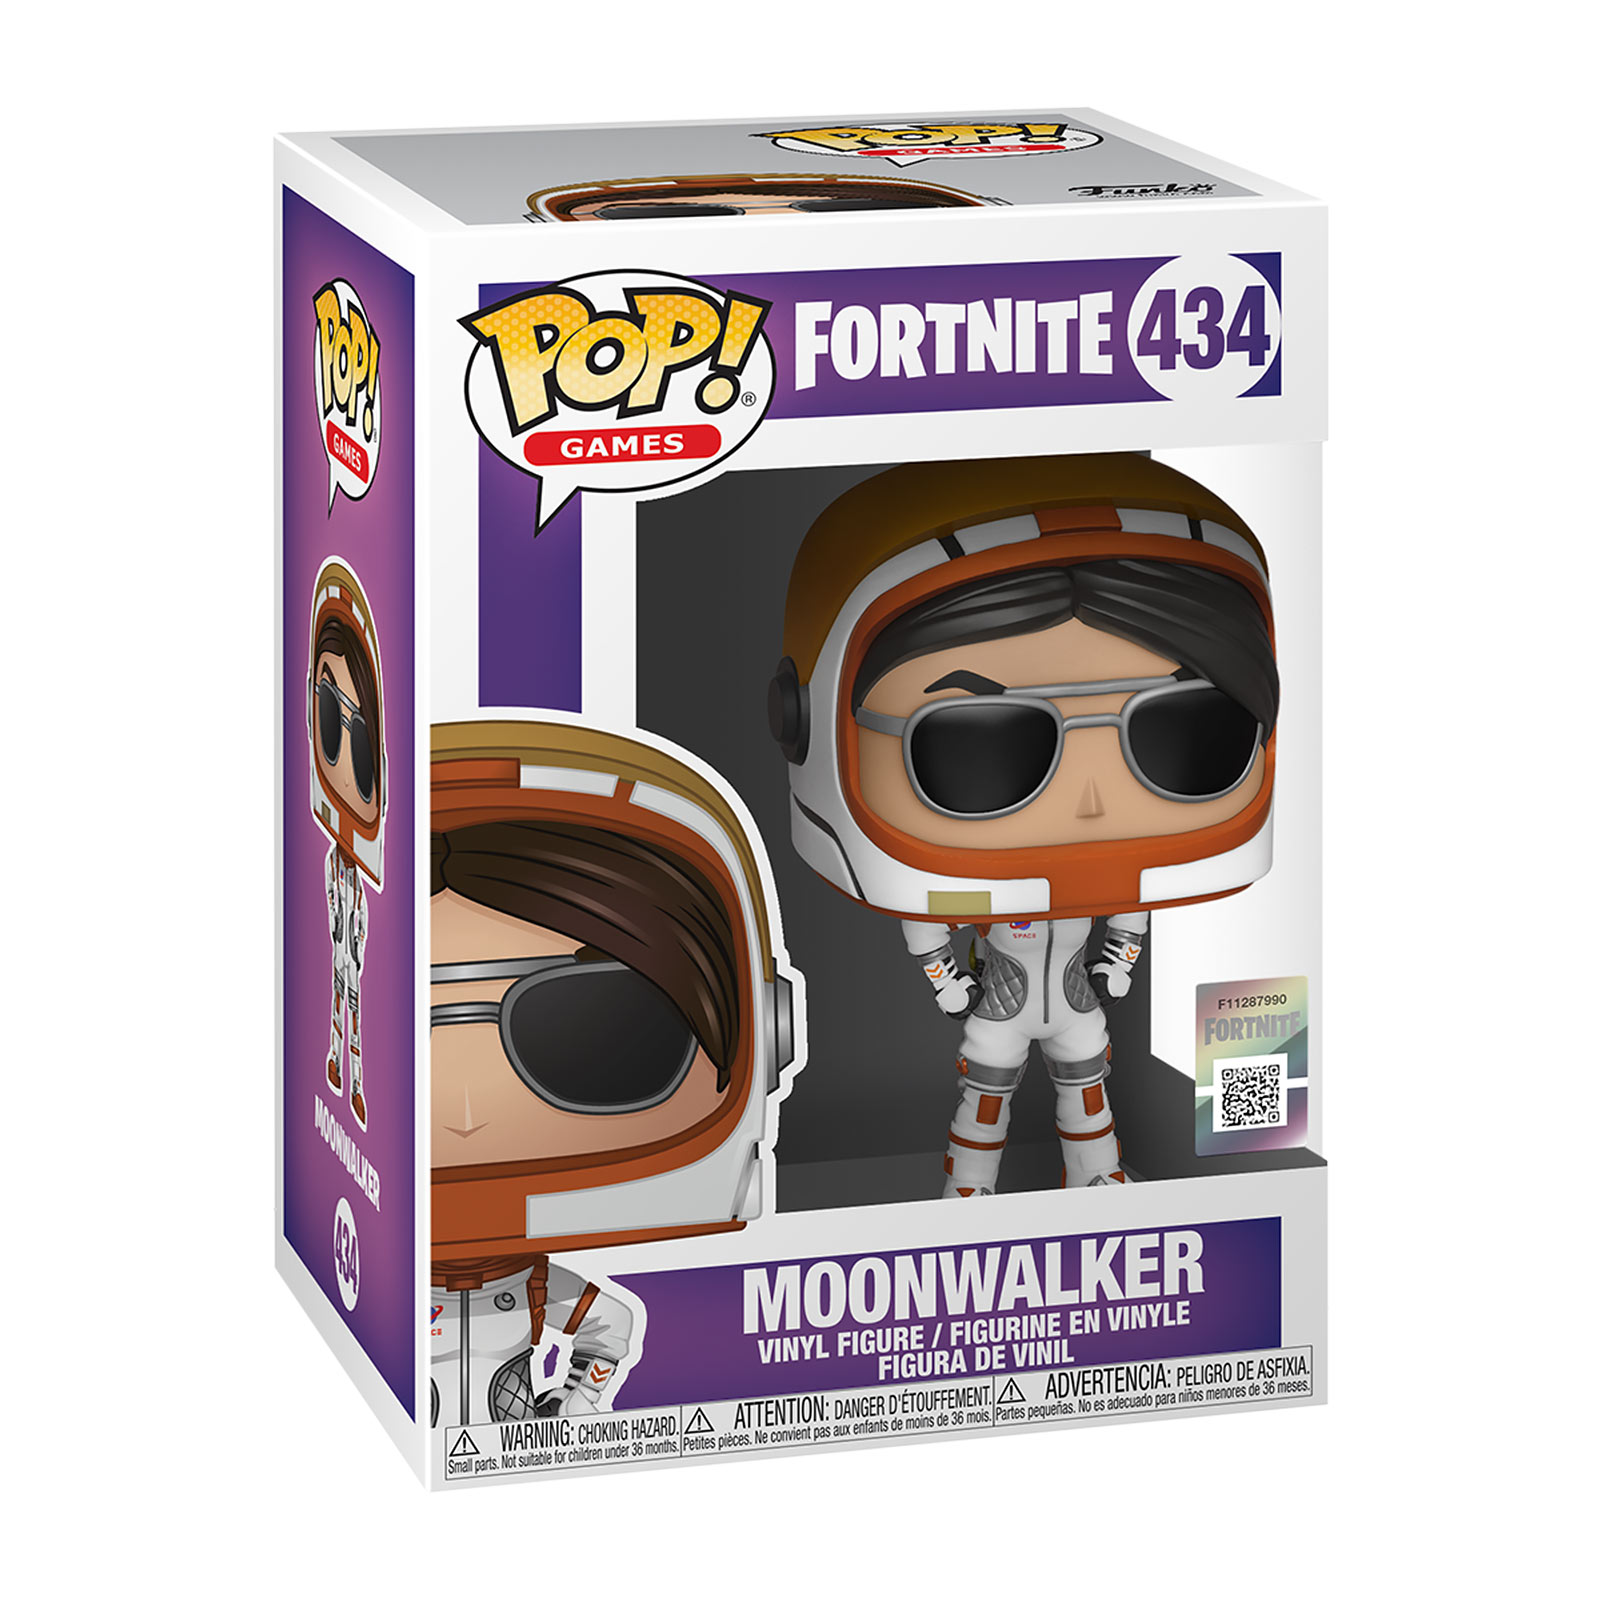 Fortnite - Moonwalker Funko Pop Figurine